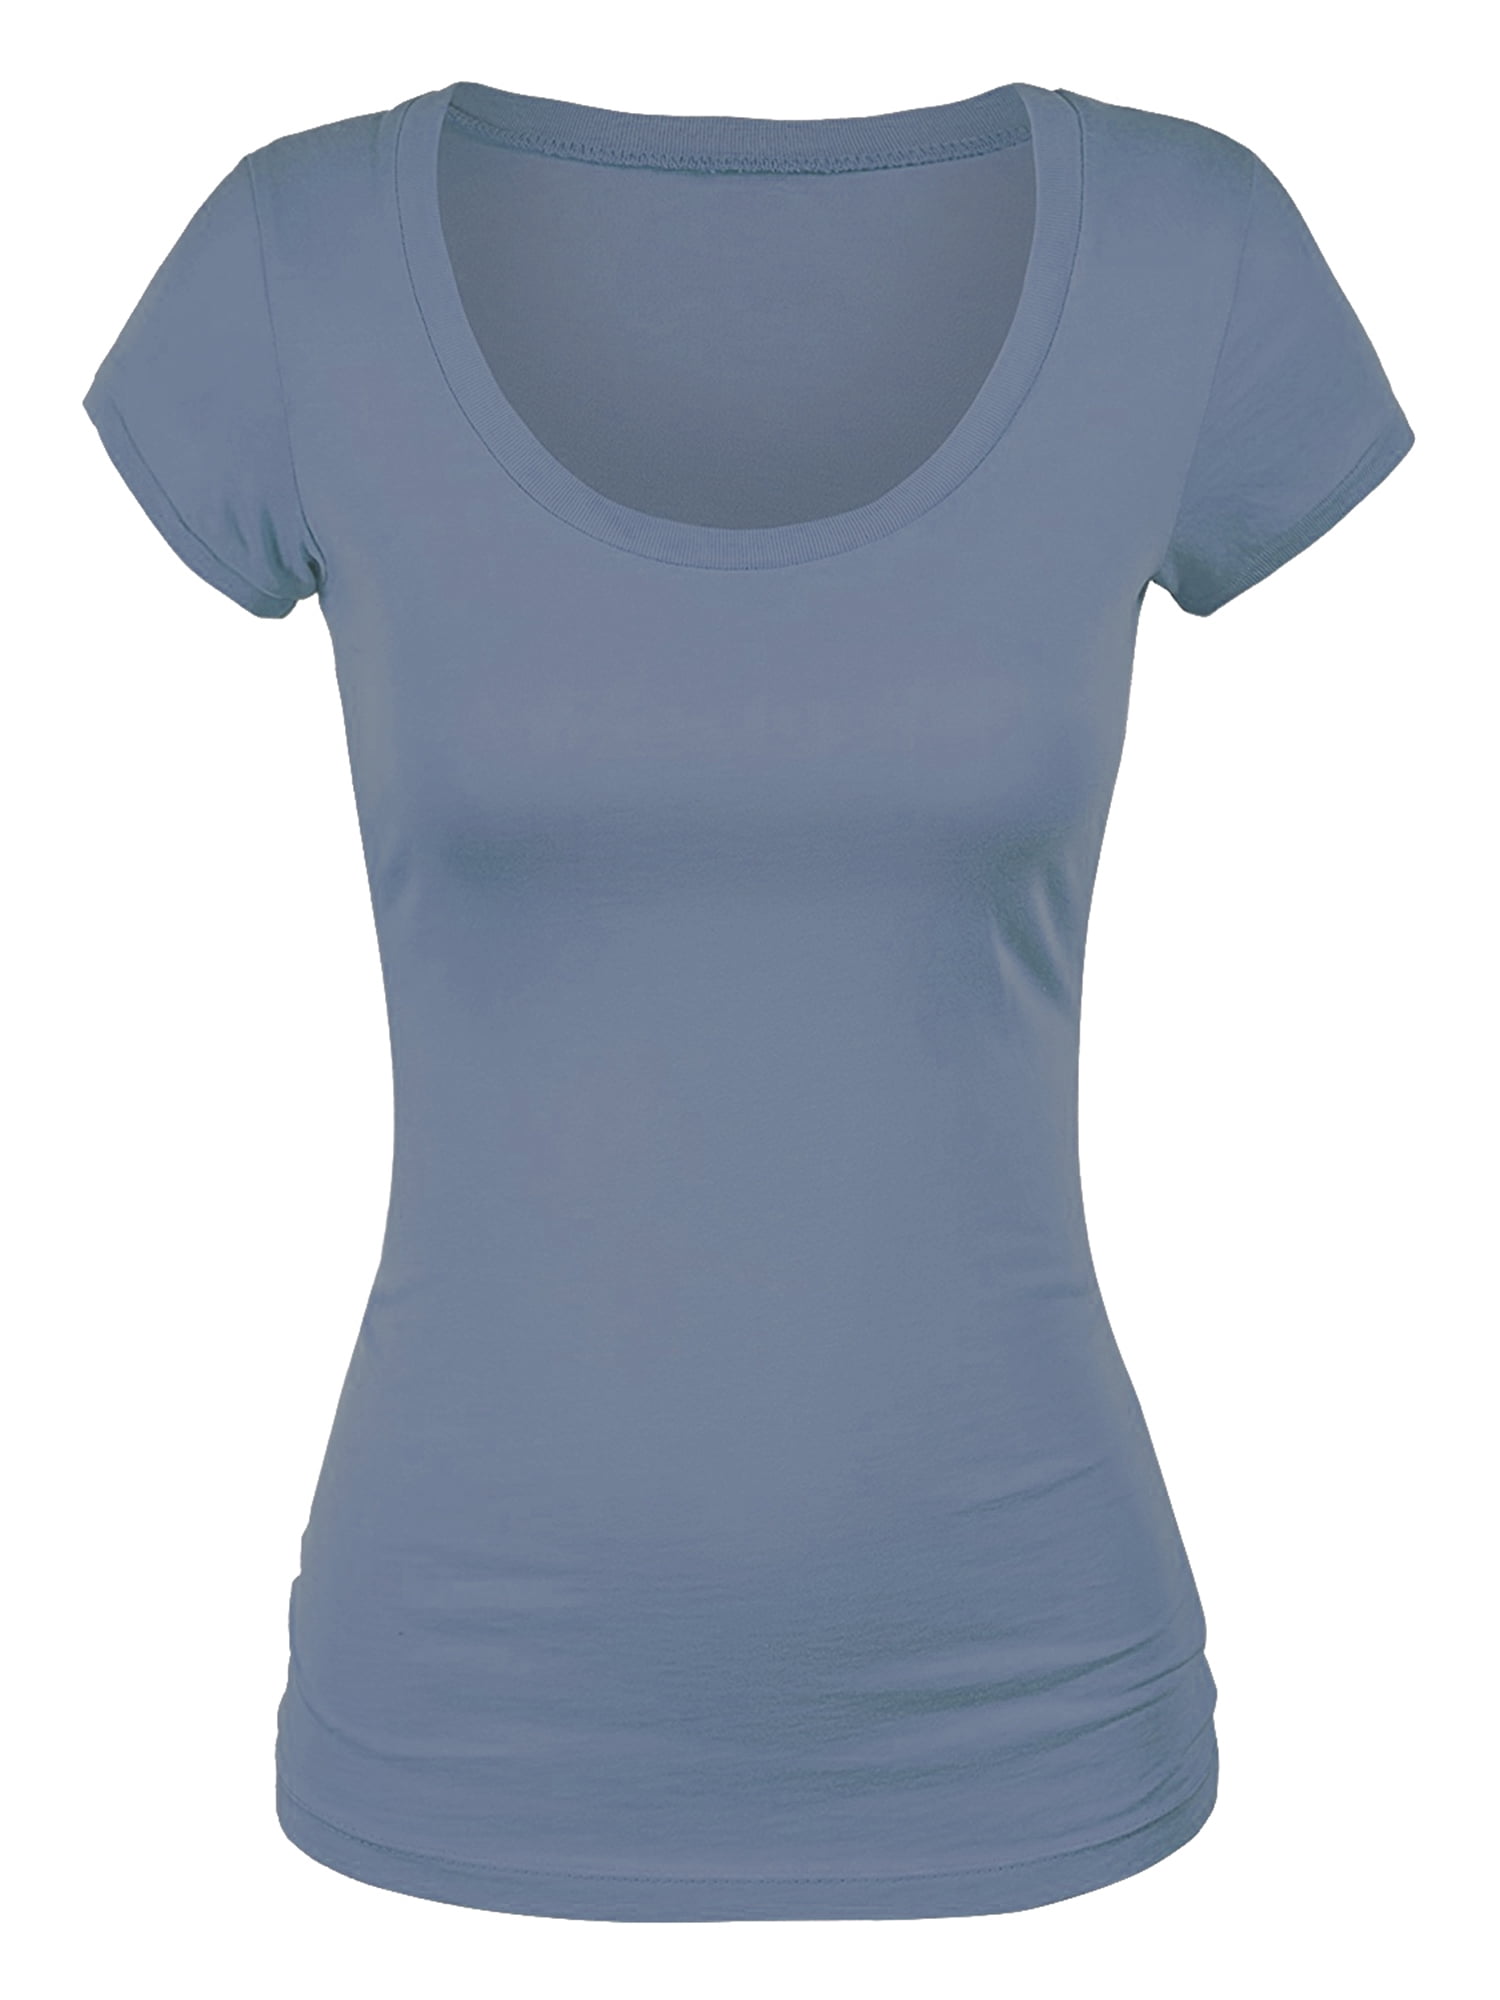 Essential Basic Scoop Neck Short Sleeve Tee for Women Tshirt -Plus ...